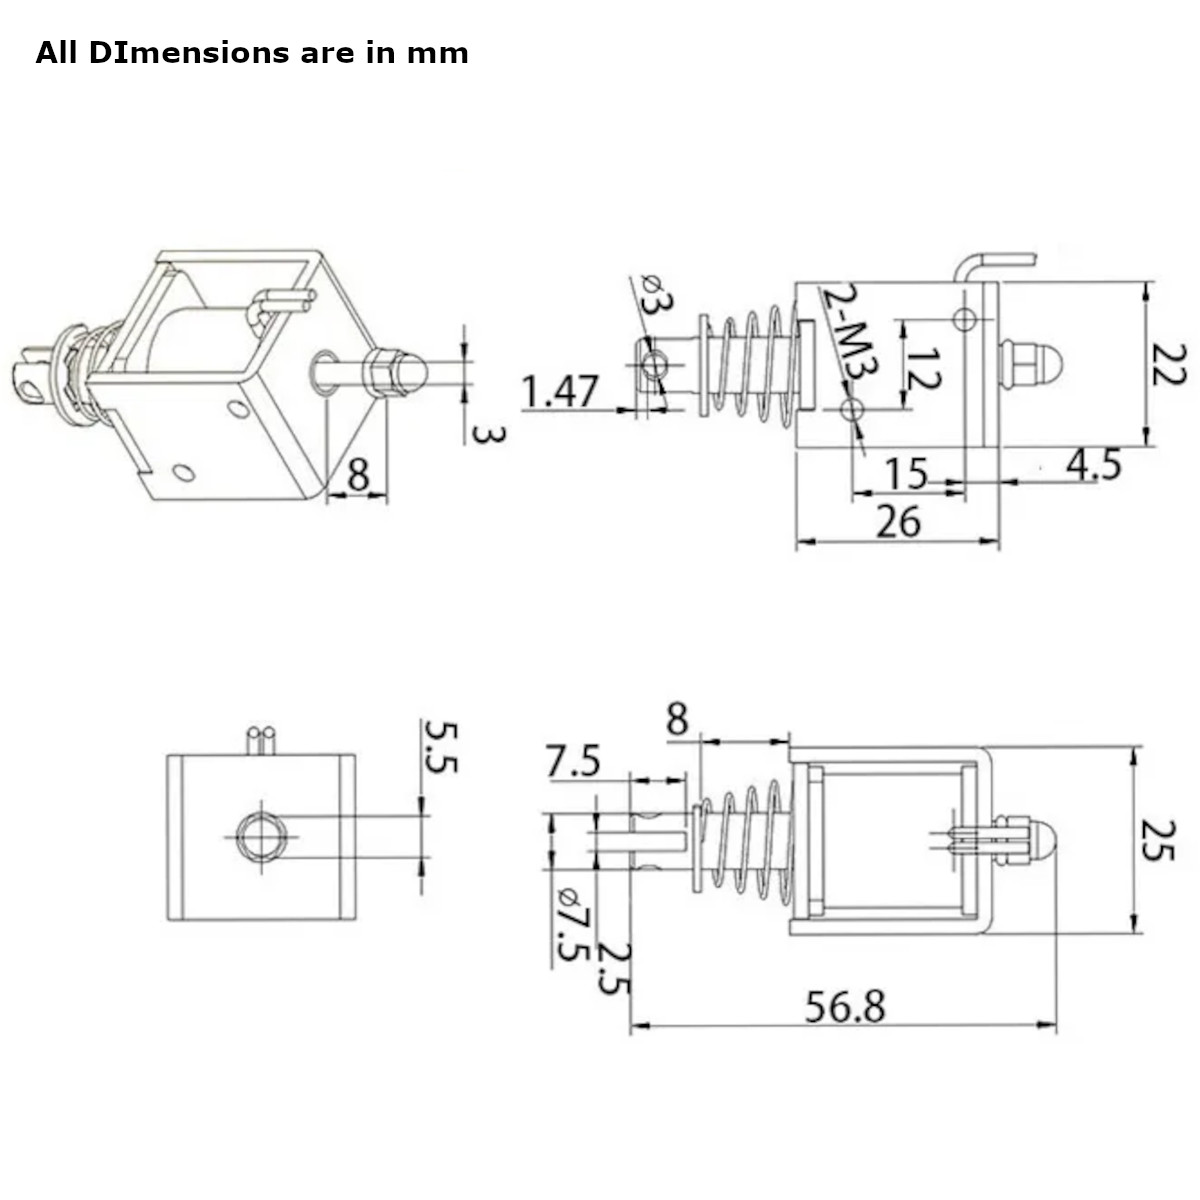 DC 12V 0.8KG 0826B Solenoid Push-Pull Linear Actuator Motor Electromagnet - Dimensions